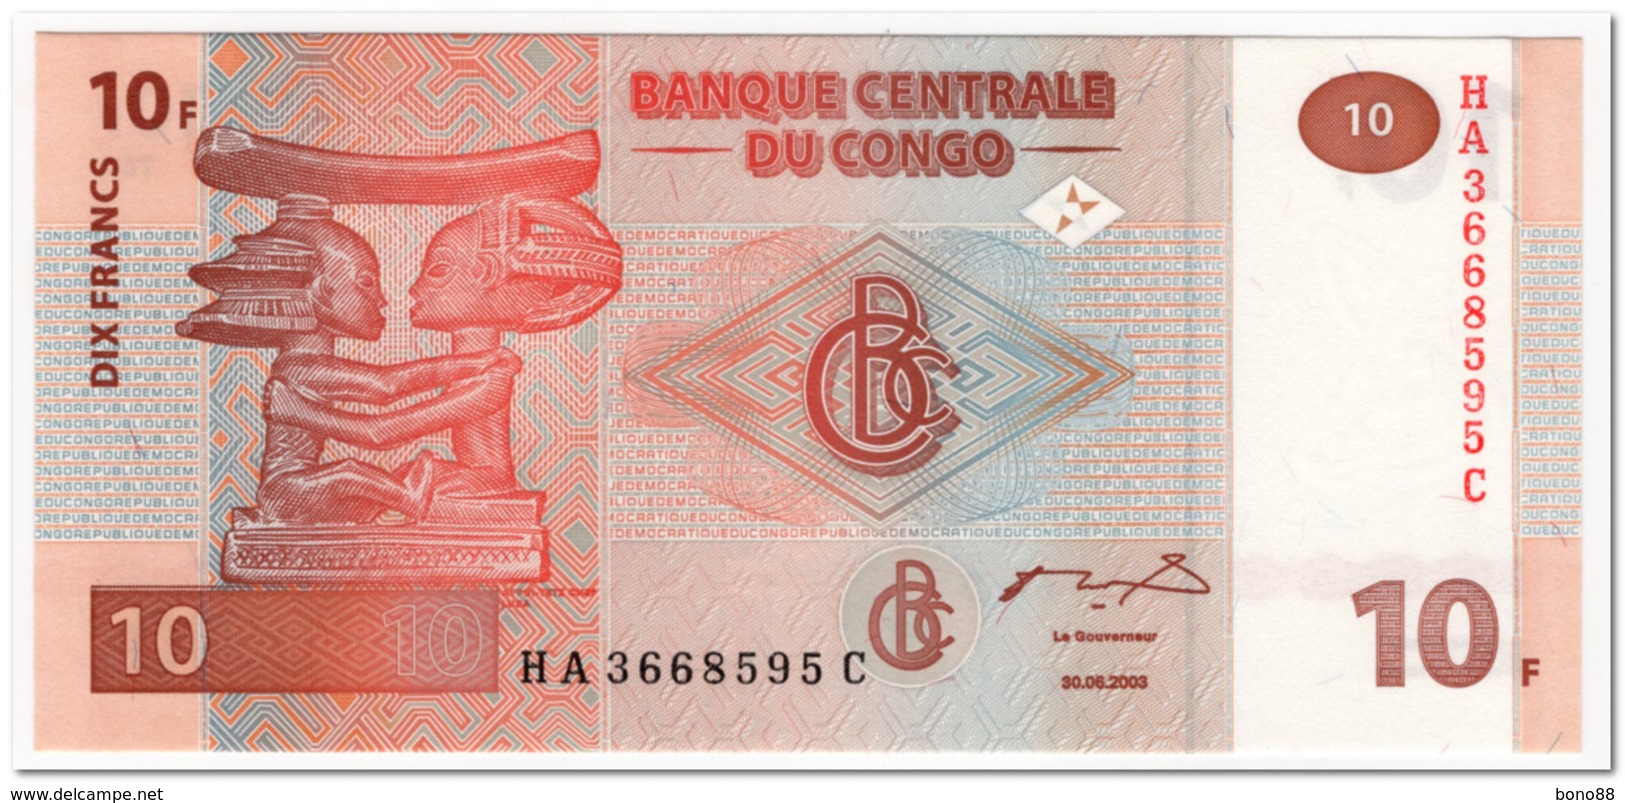 CONGO,10 FRANCS,2003,P.93, UNC - Democratic Republic Of The Congo & Zaire